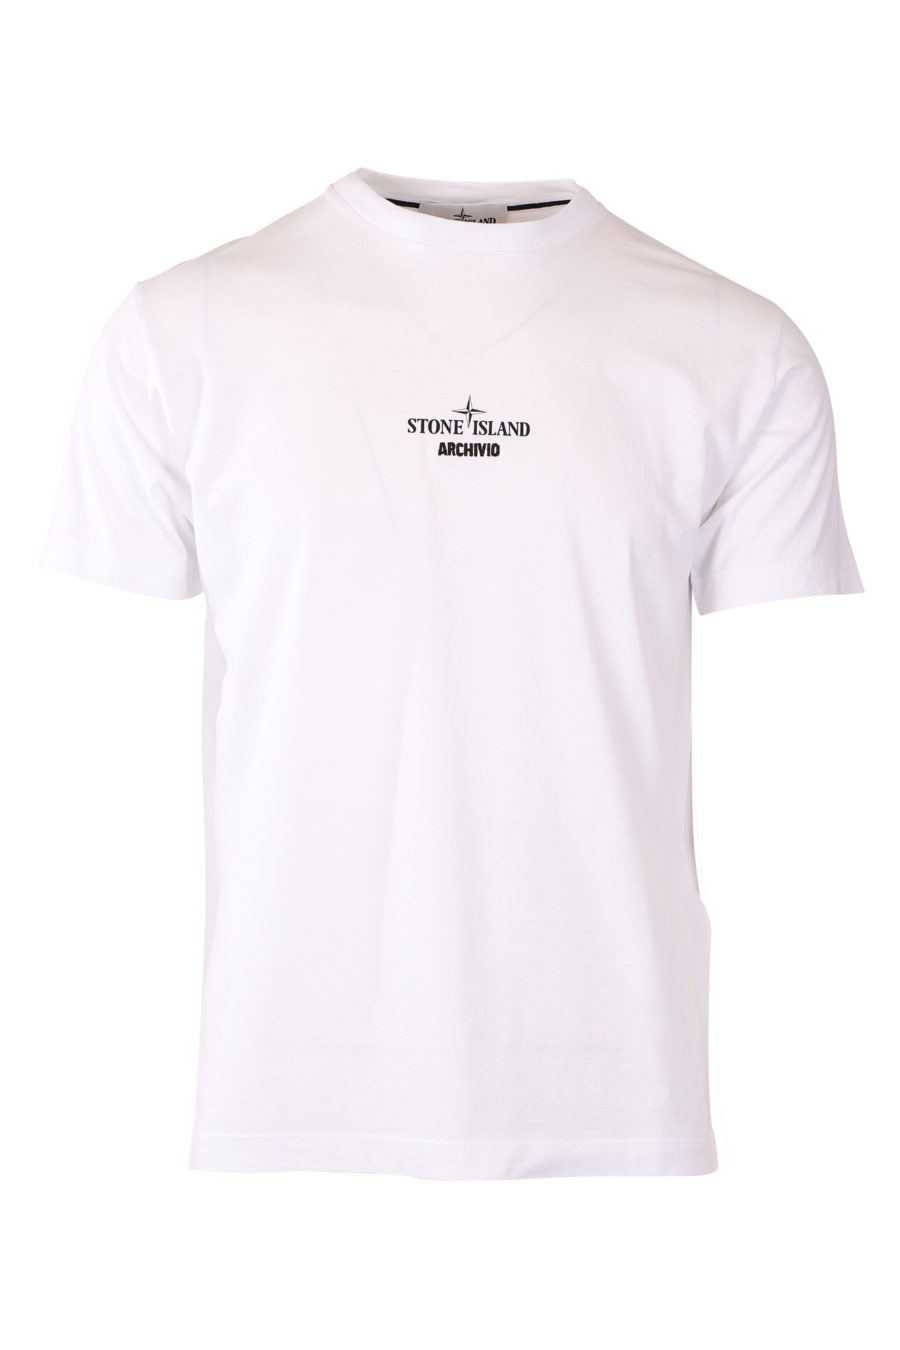 Camiseta blanca logo "Archivio" - IMG 9395